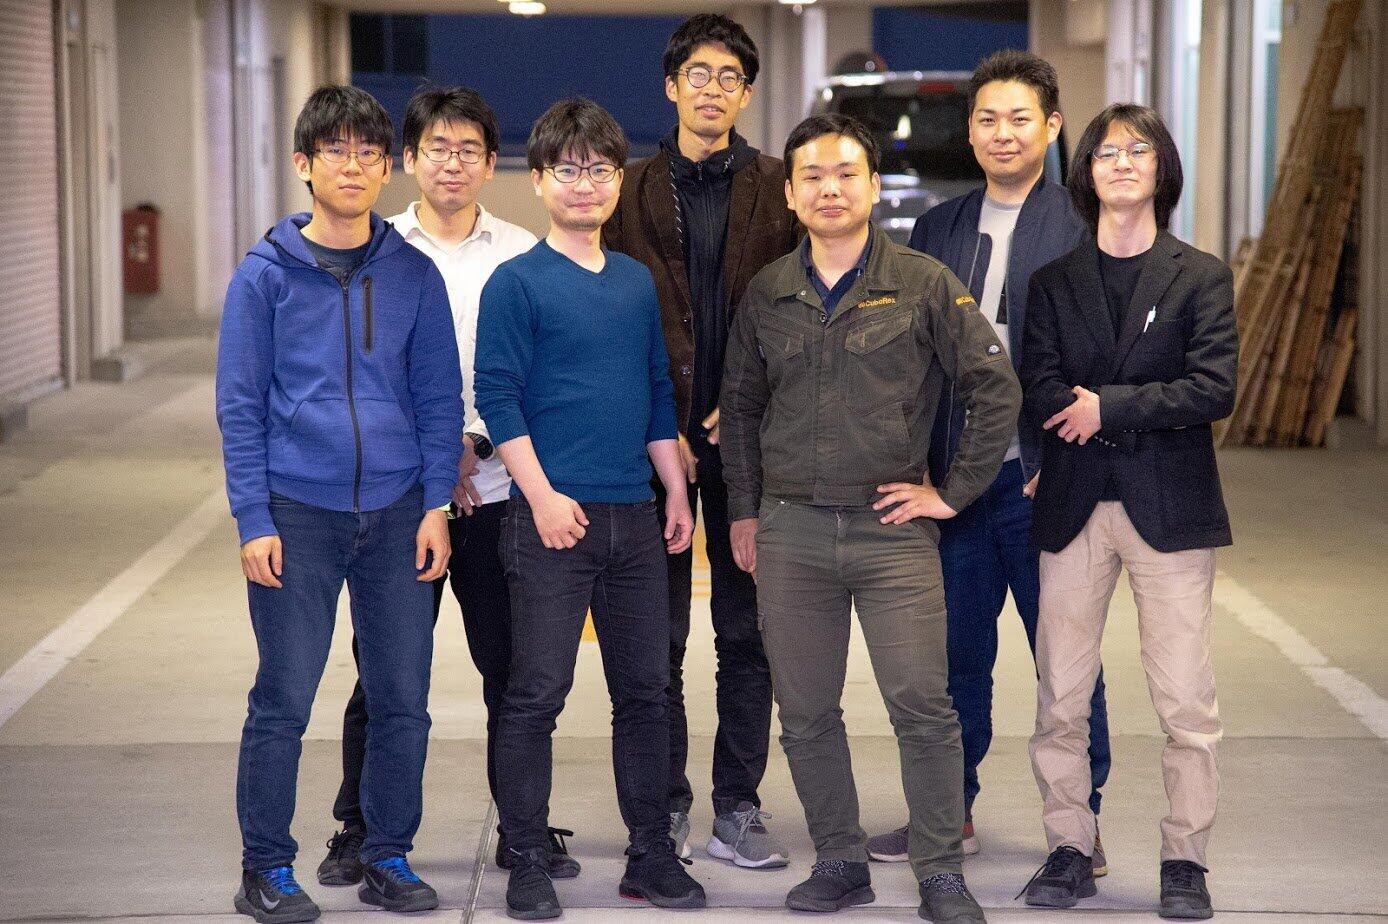 CuboRexは2016年設立のベンチャー企業で、町工場が集積する東京・荒川区に開発拠点を構える。社員数は7人。